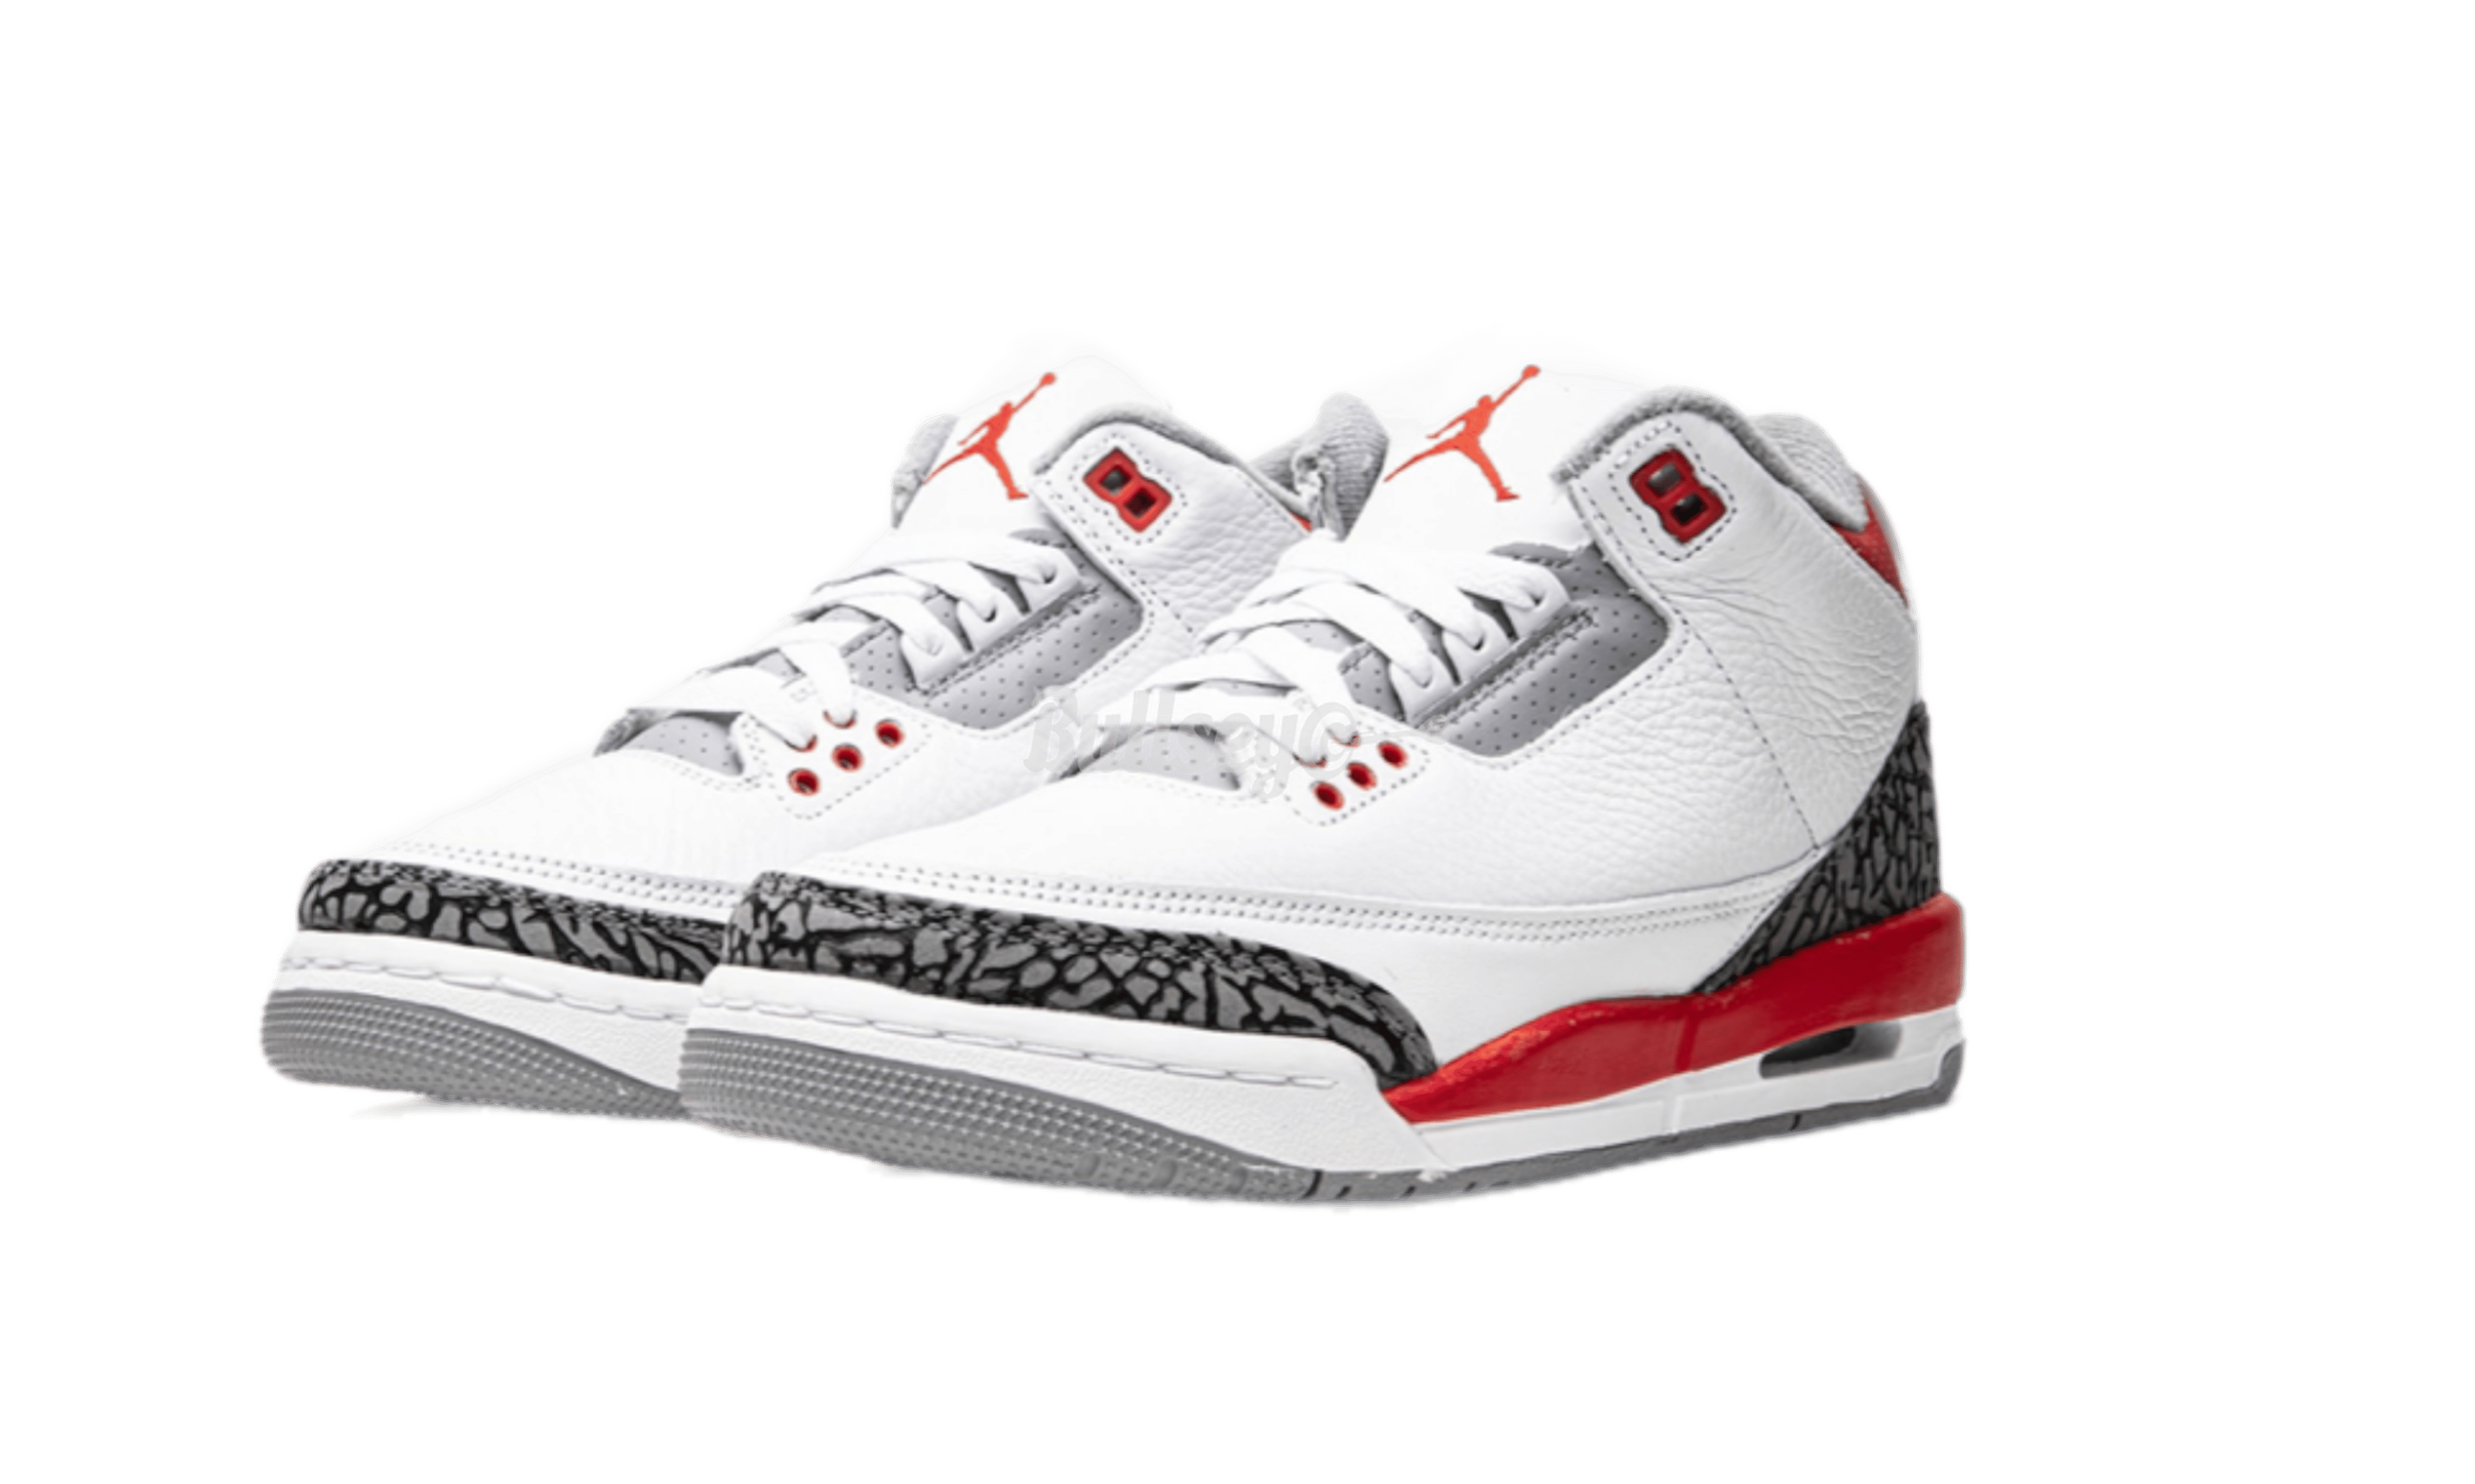 Alternate View 1 of Air Jordan 3 Retro "Fire Red" GS (2022)